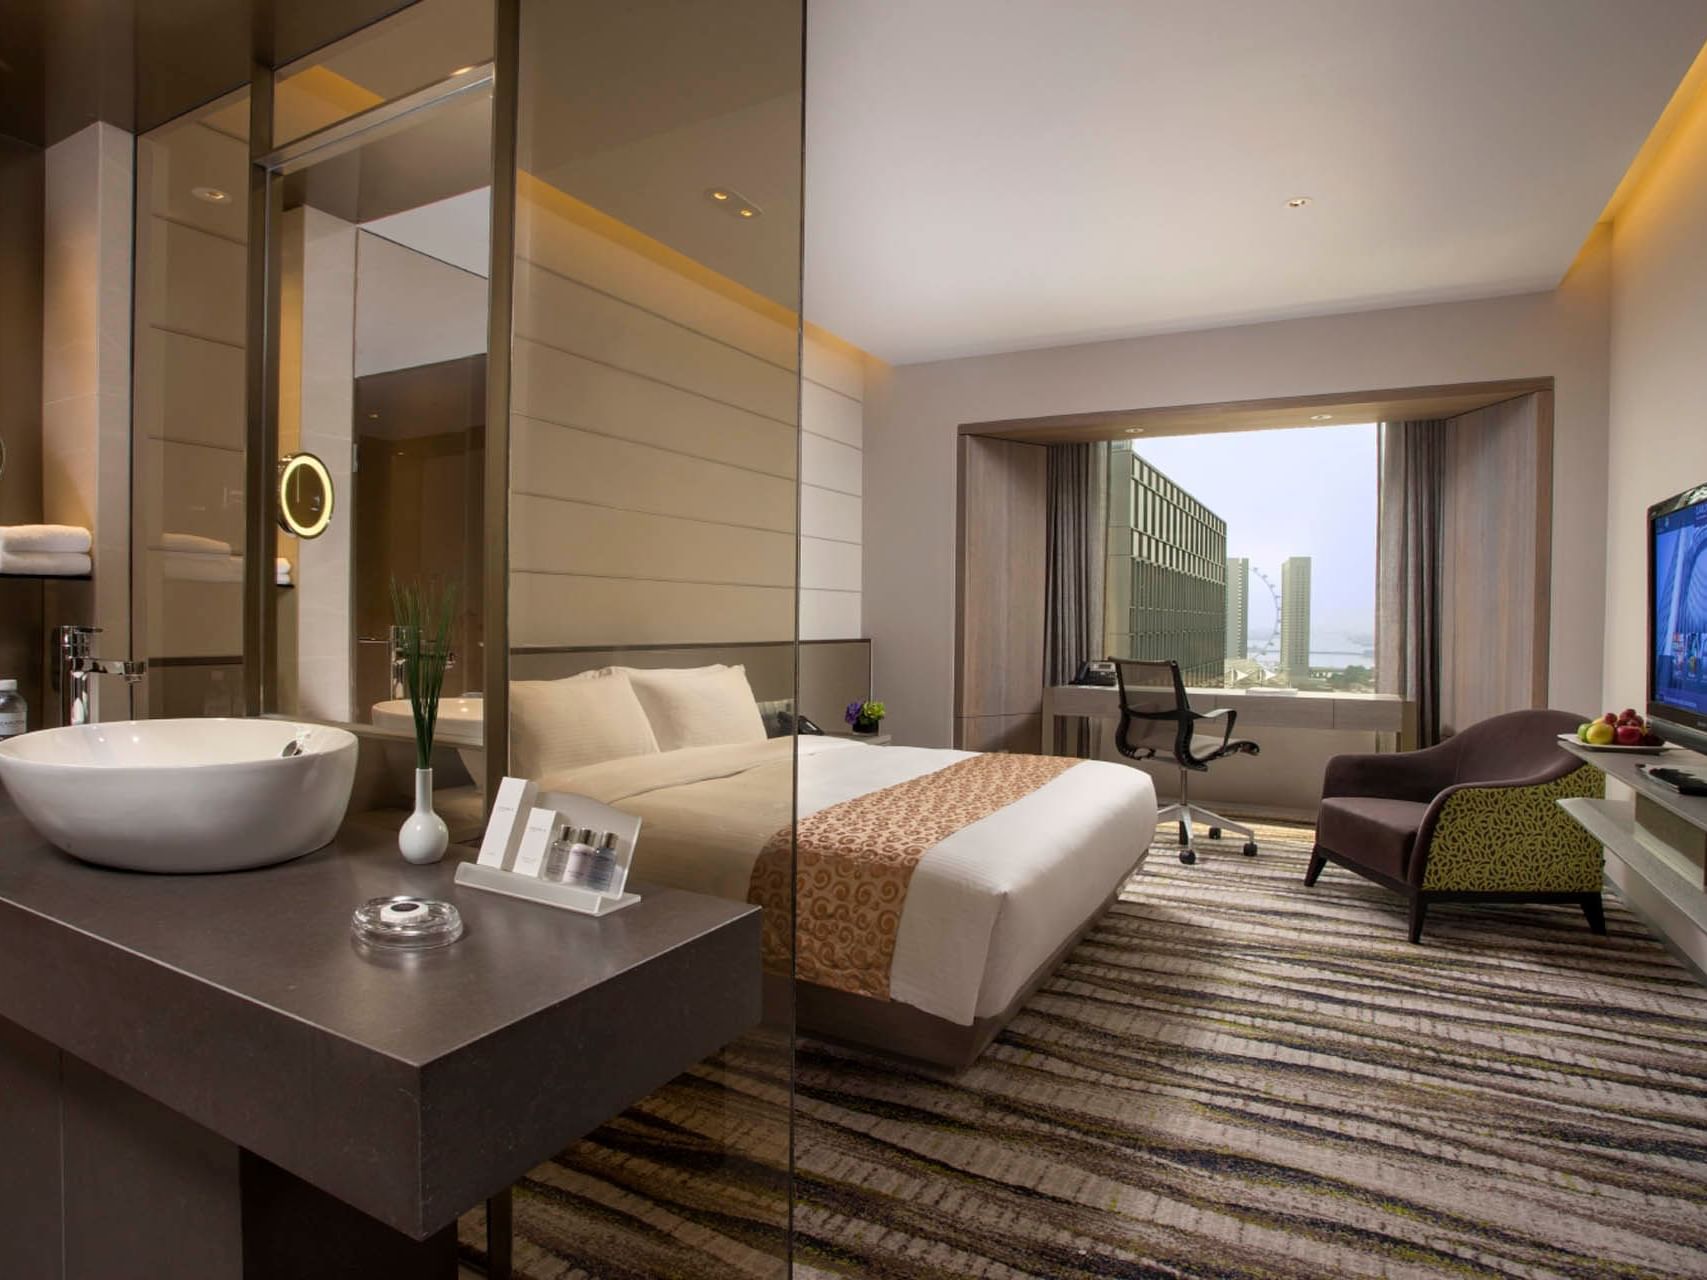 Bed, sofa & TV Carlton Club Room at Carlton Hotel Singapore